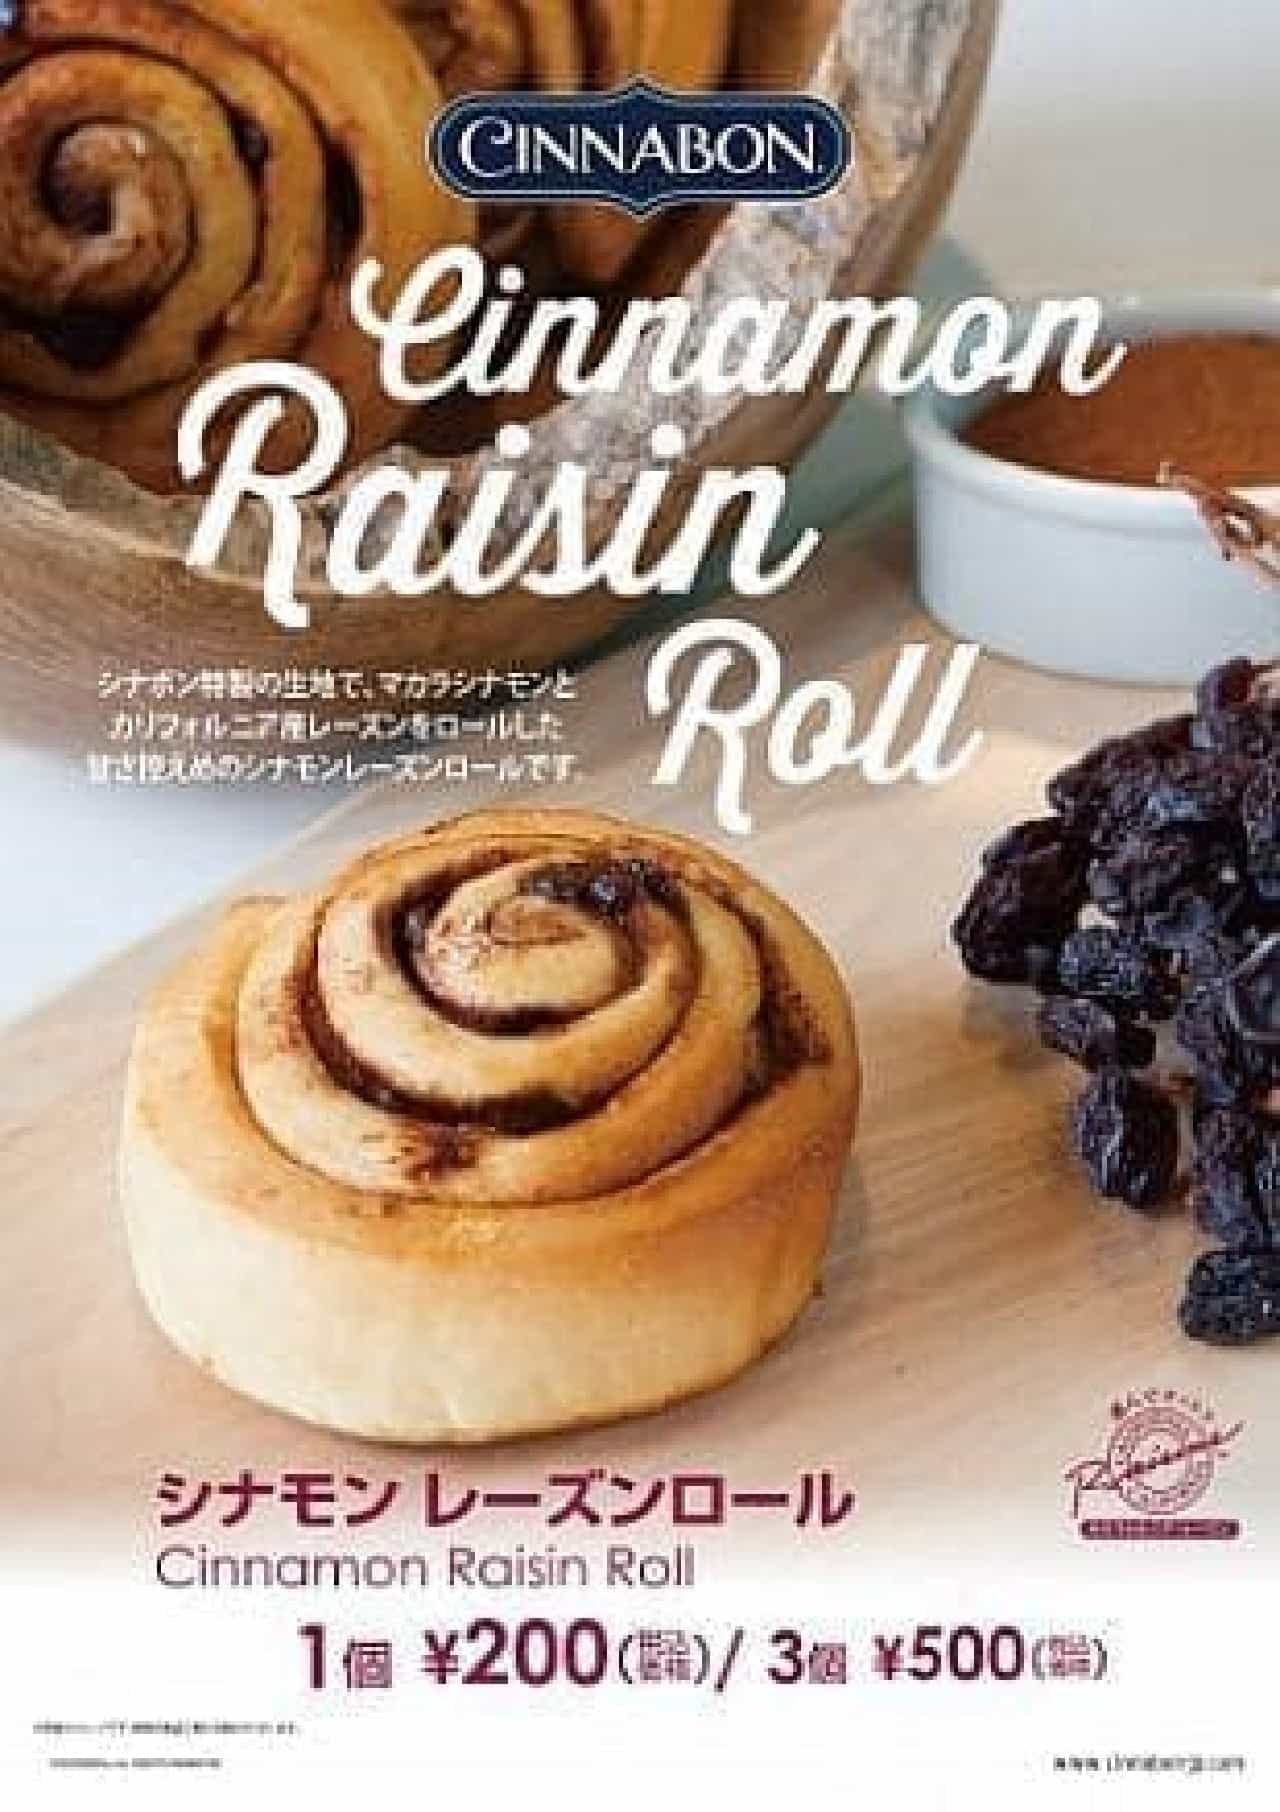 Cinnabon Roppongi store "Cinnamon raisin roll"